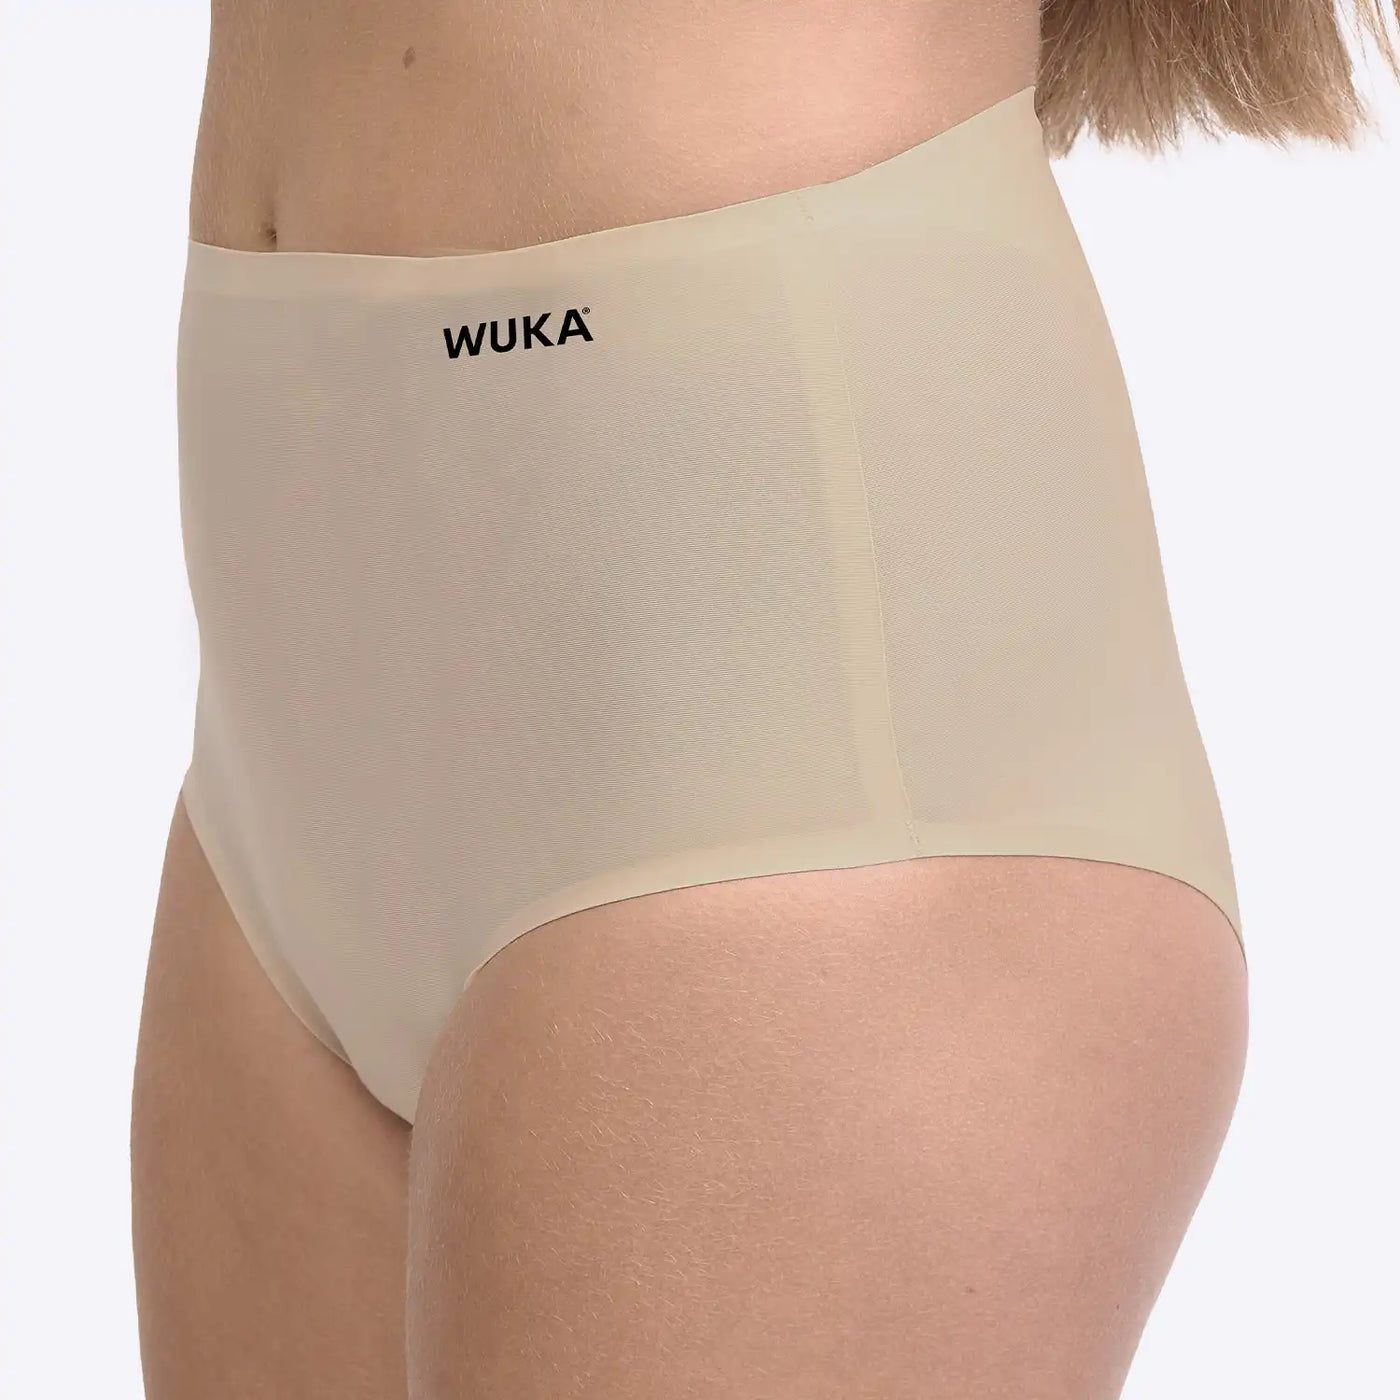 WUKA Stretch Seamless Period Pants High Waist Style Heavy Flow Light Nude Colour Side